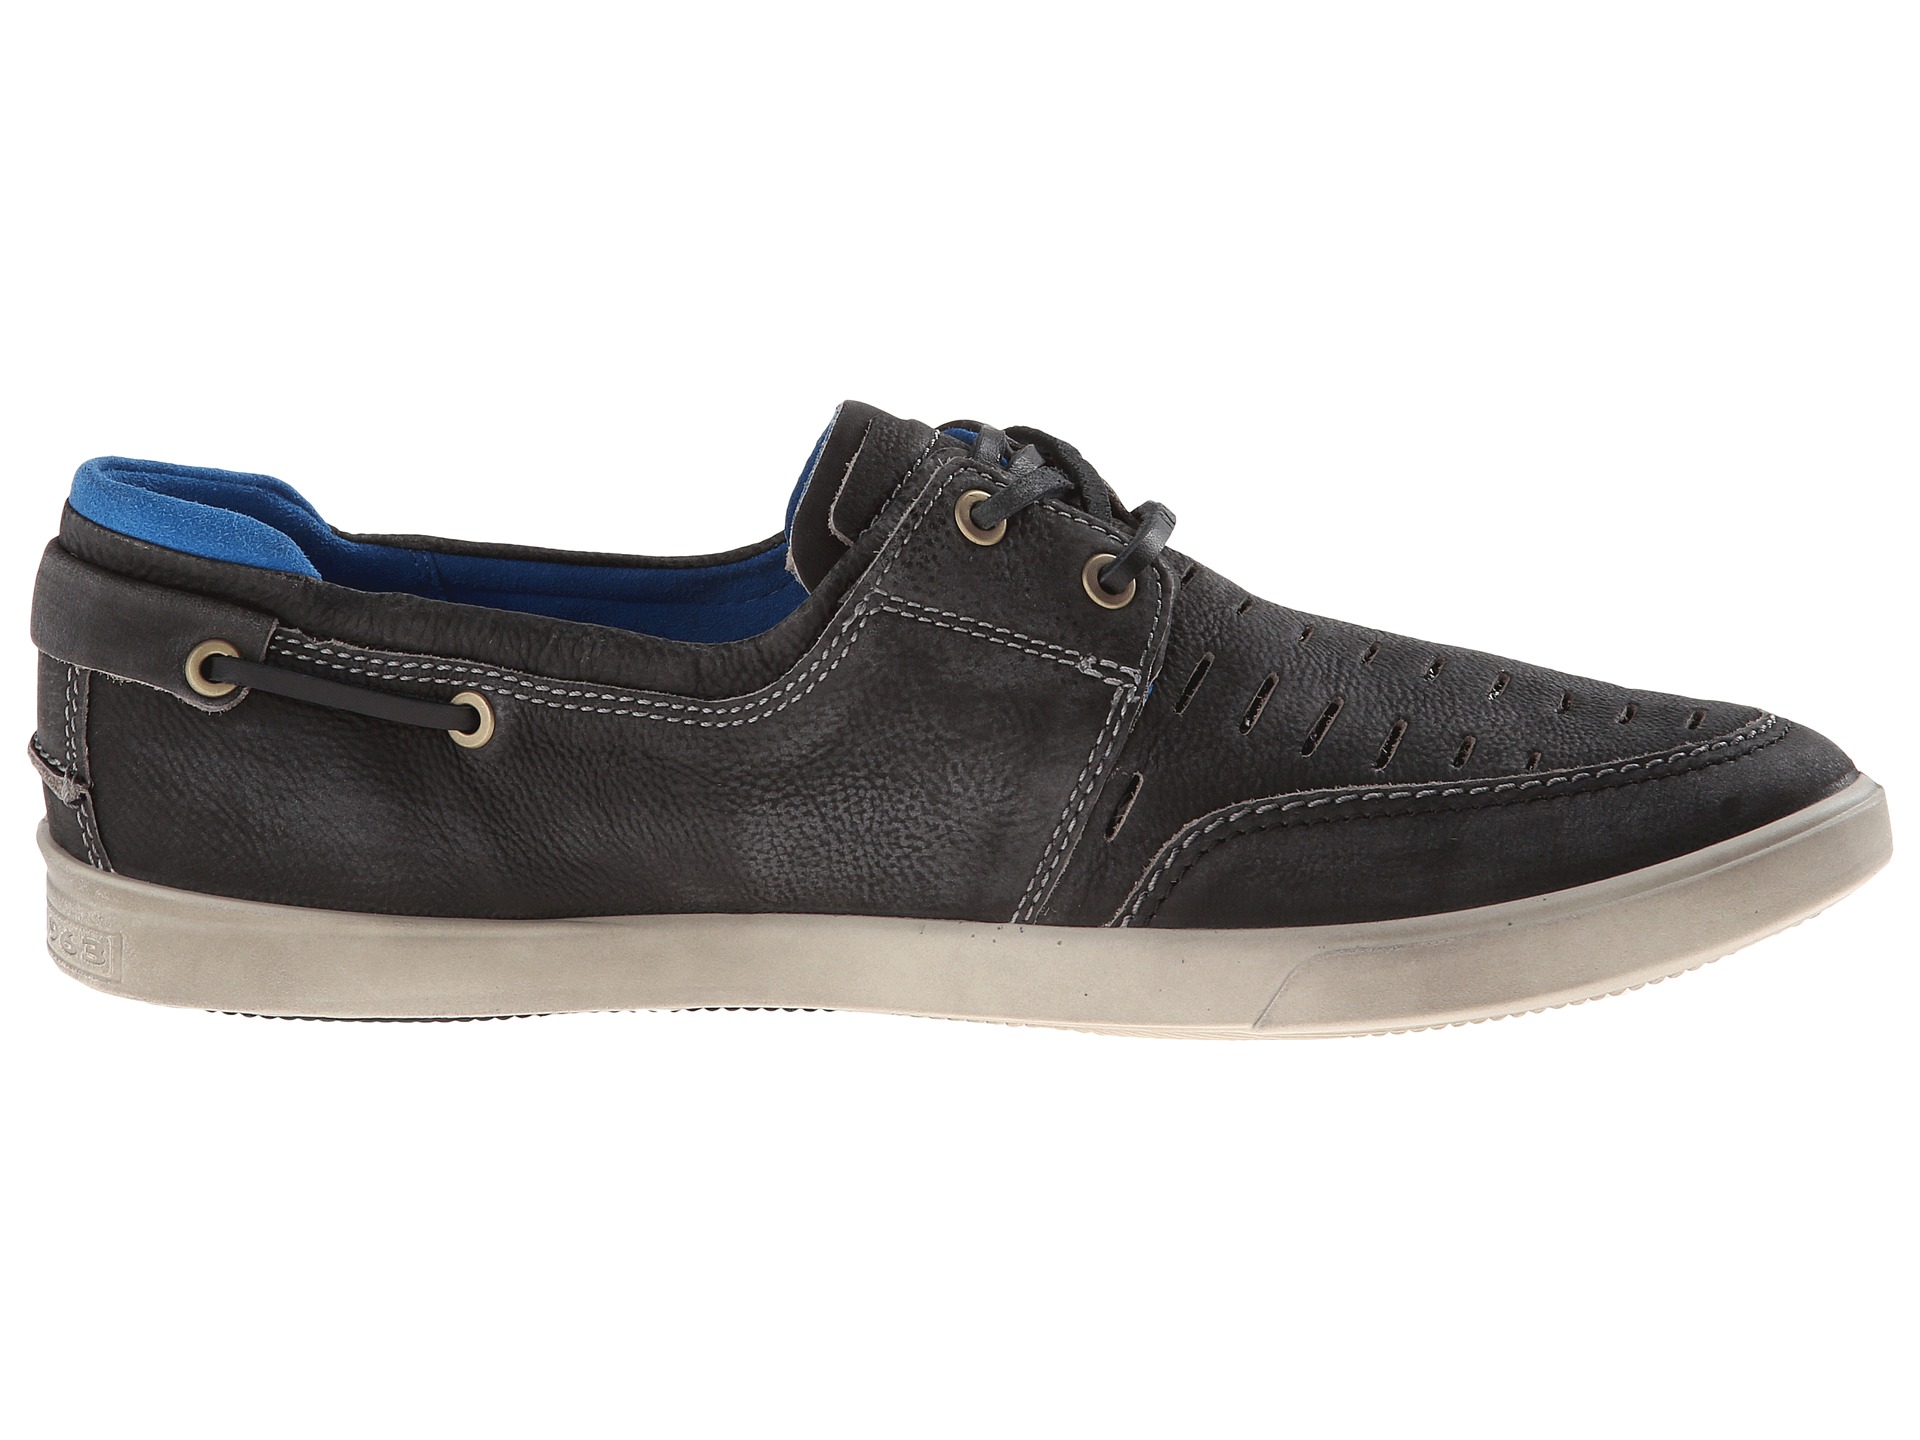 Ecco Collin Trend Boat Shoe Black Khara | Shipped Free at Zappos